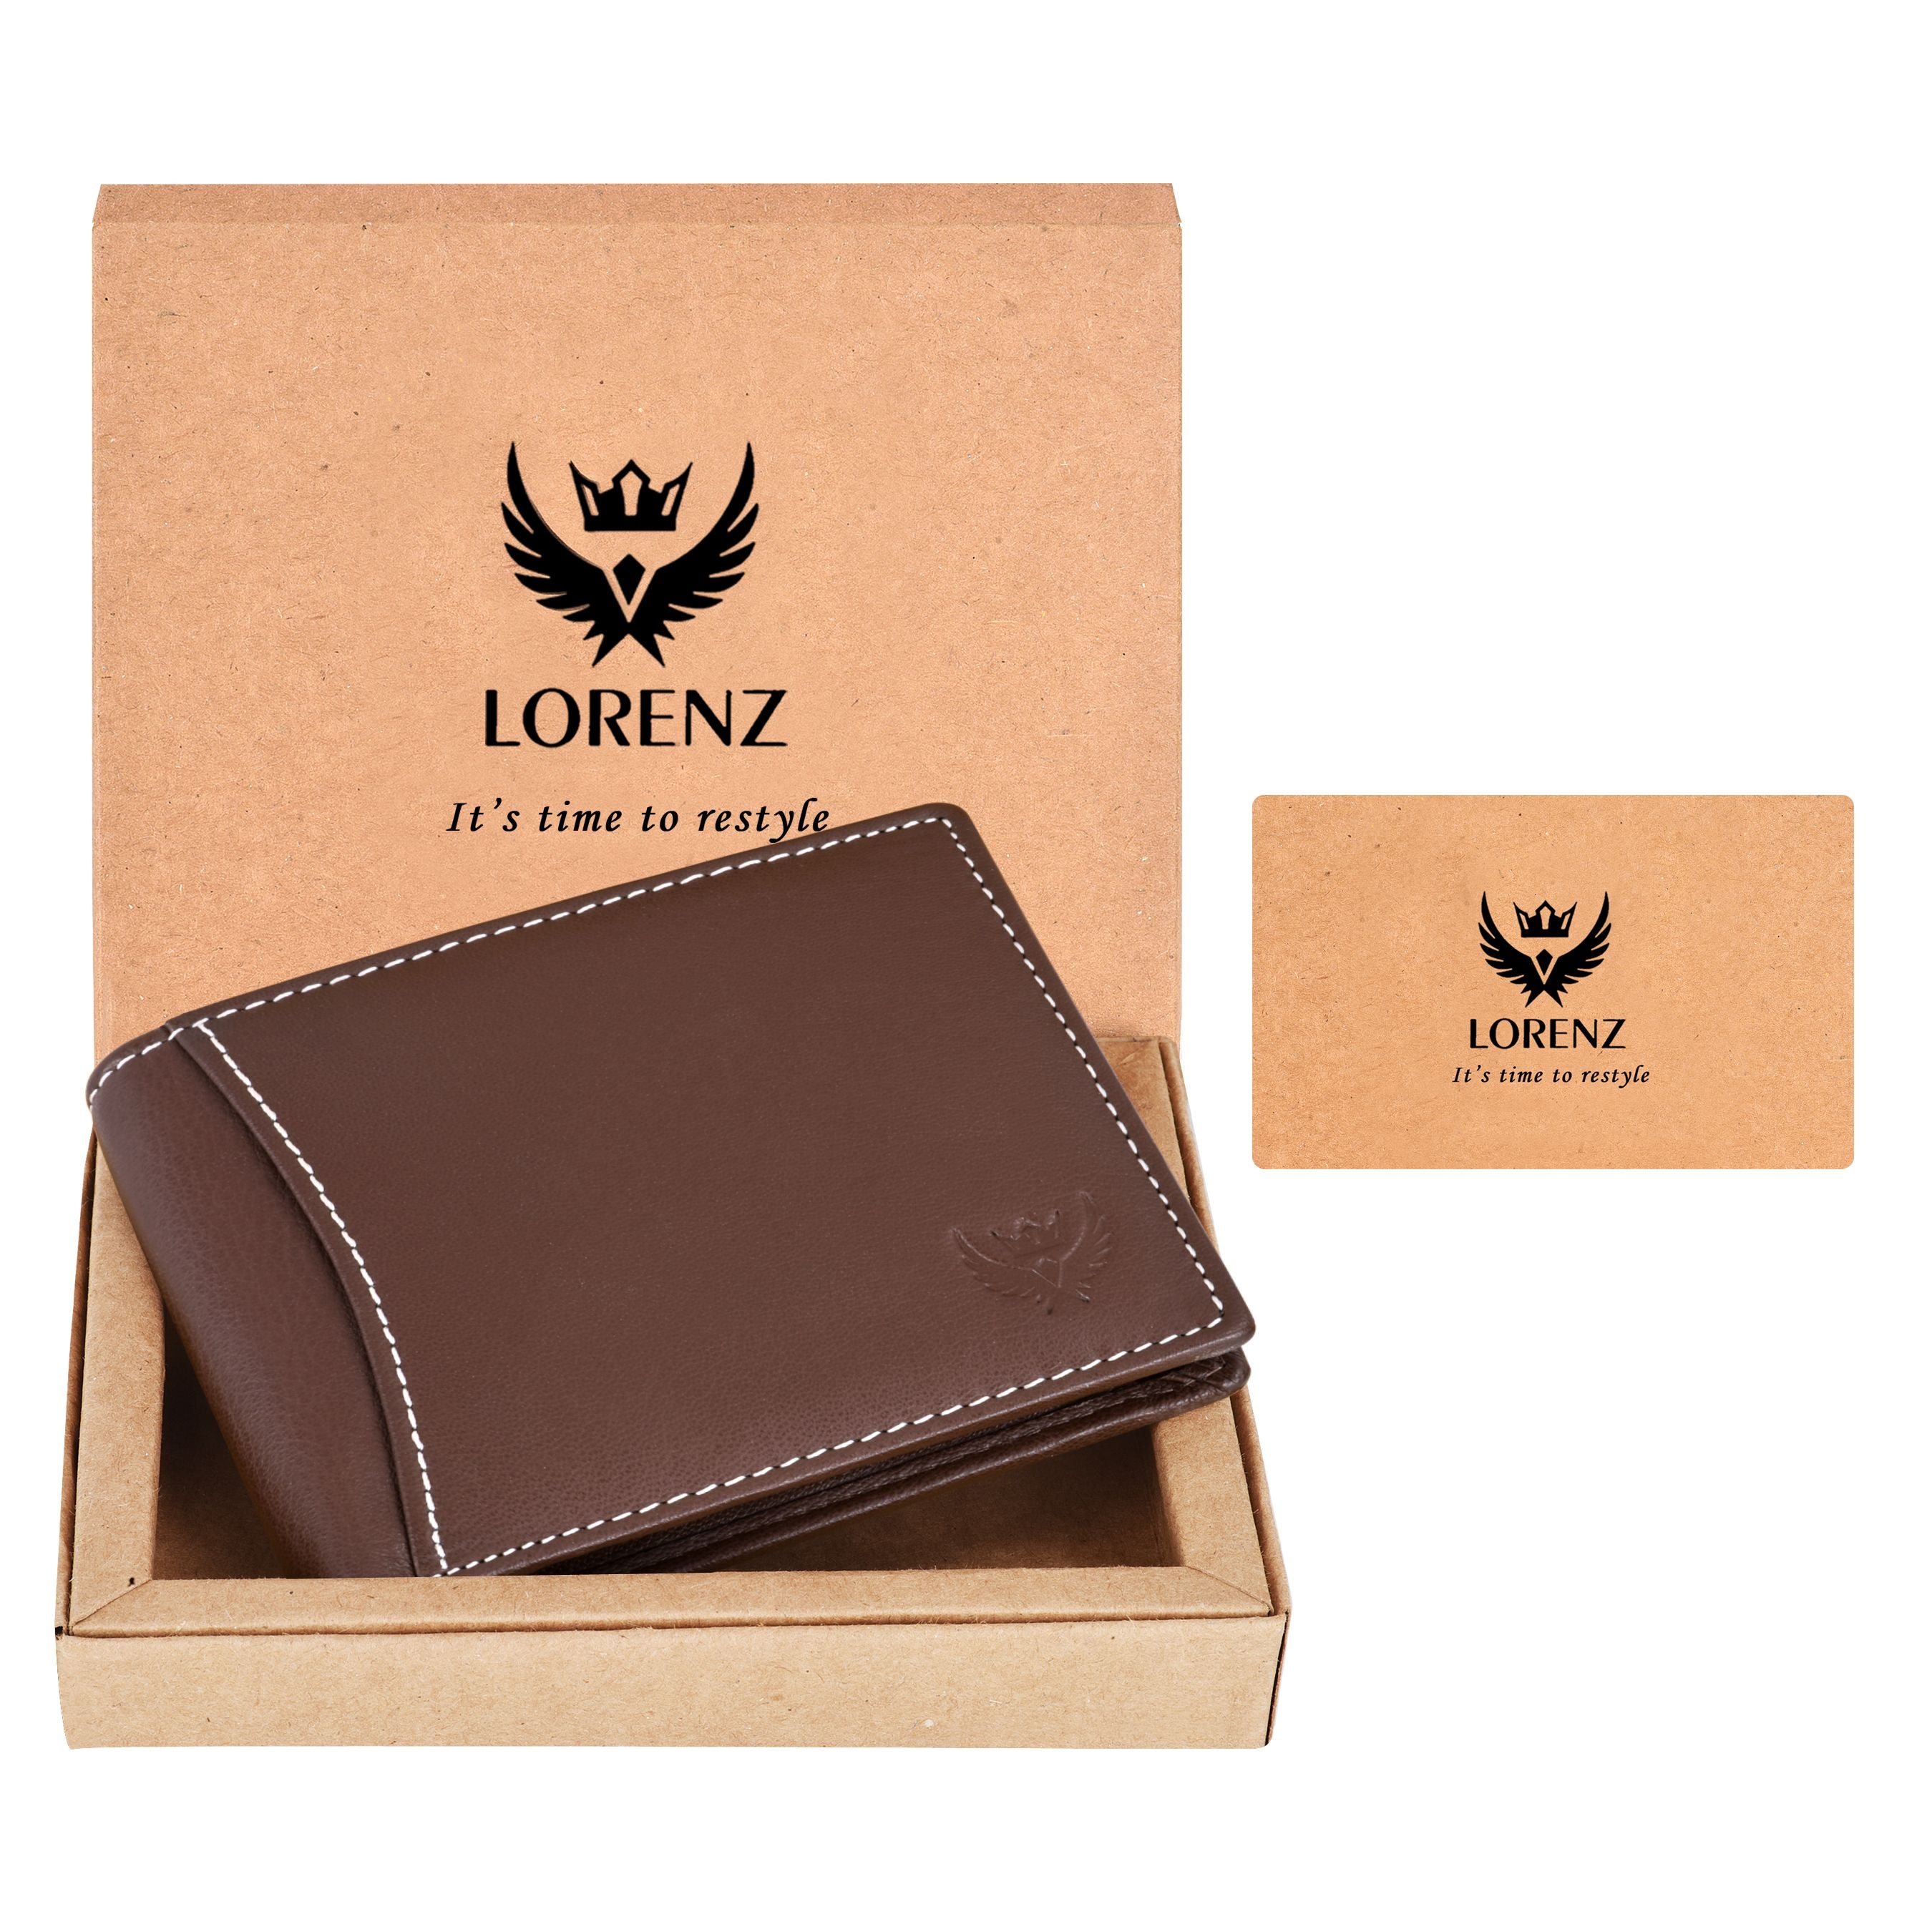 GL-06 - Lorenz Fashion